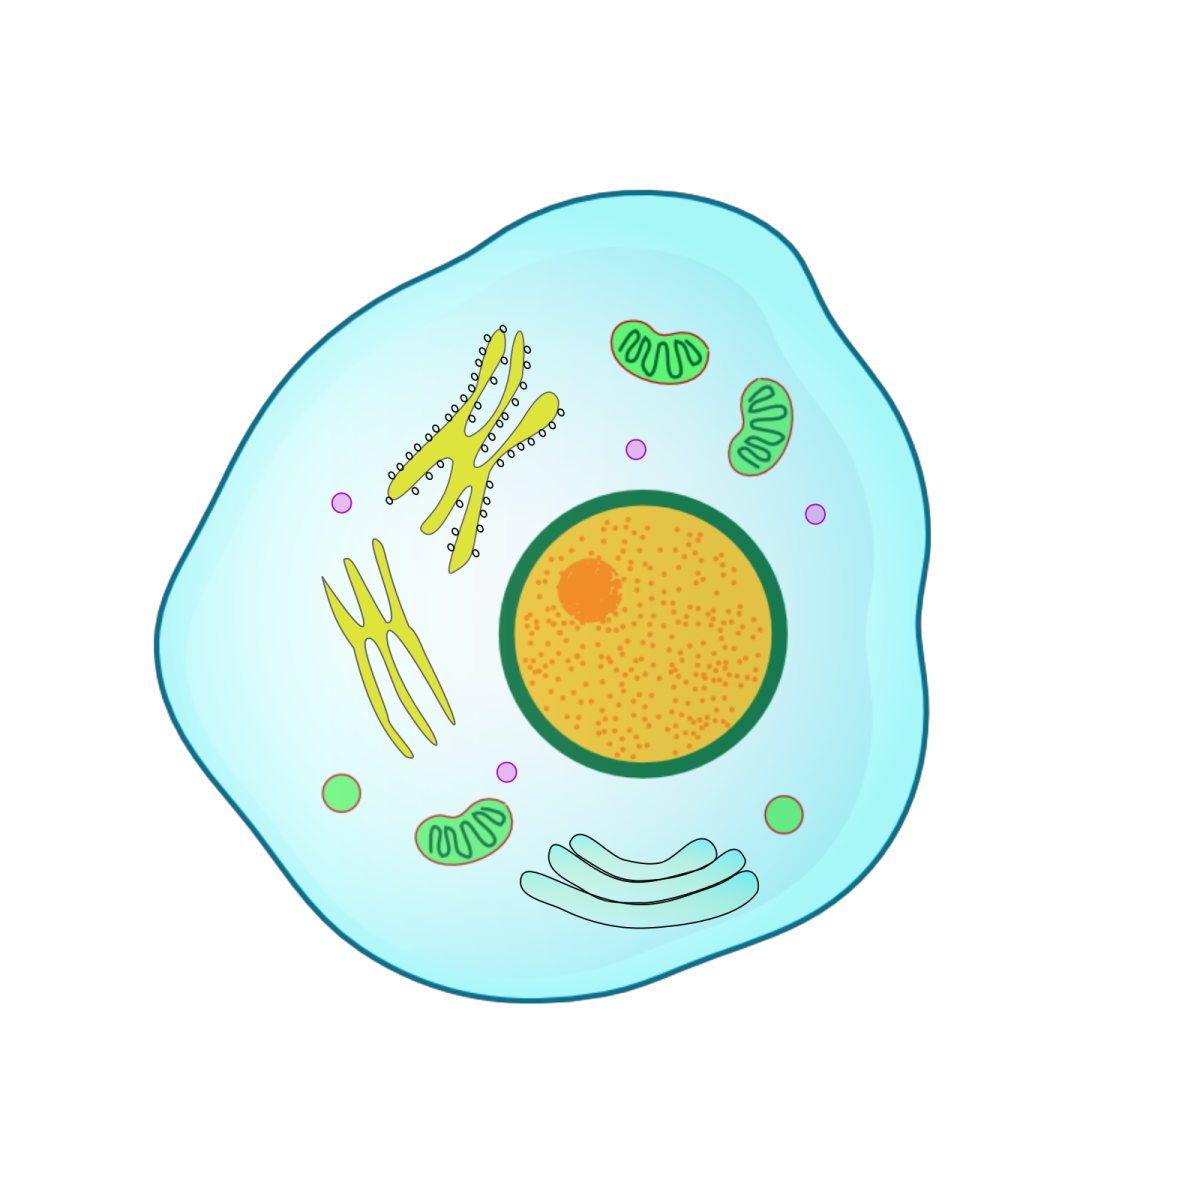 Клетка человека изображение. Клетка биология. Изображение клетки. Живая клетка рисунок. Клетка живого организма.